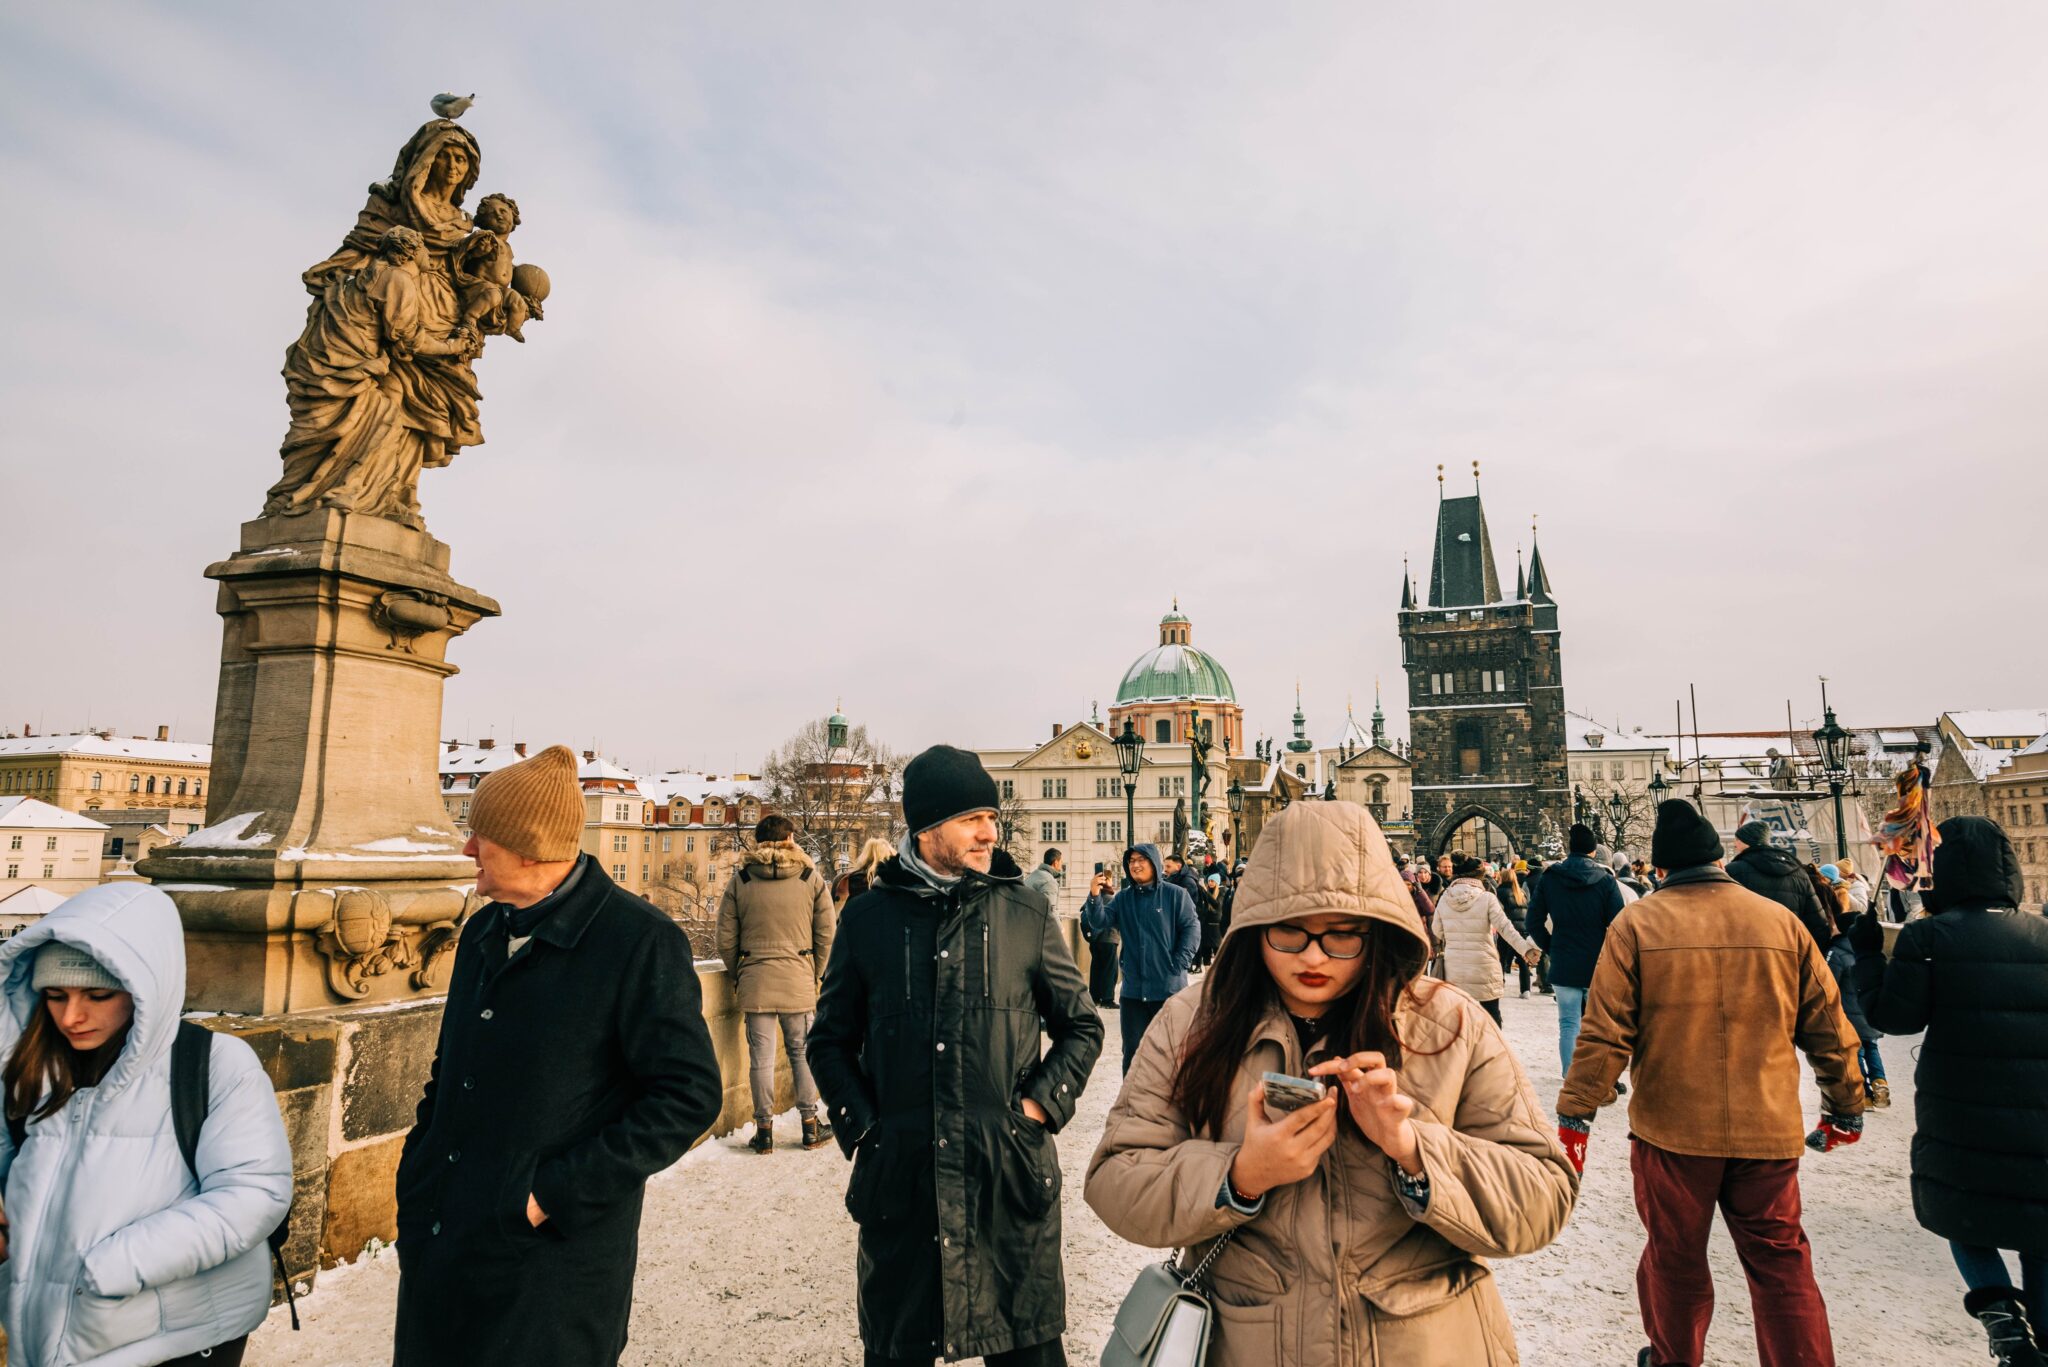 What do Czech people look like in Prague? | Prague.org